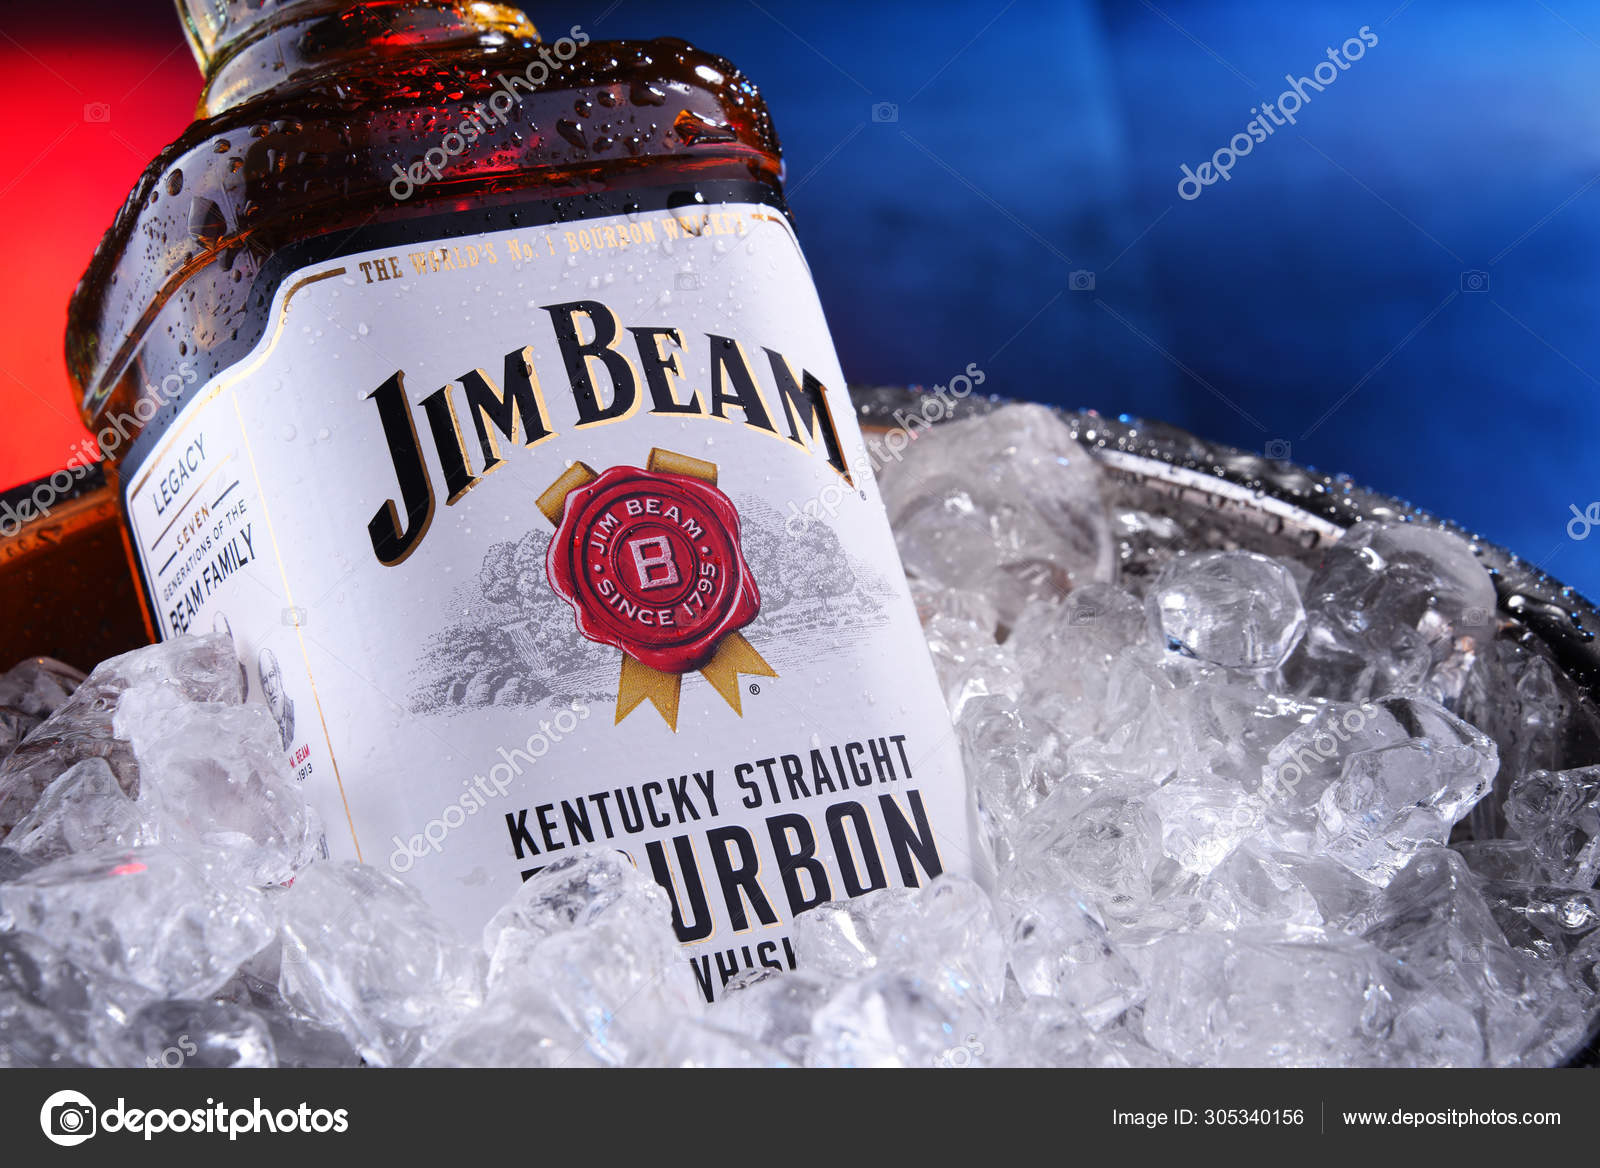 https://st4.depositphotos.com/1063437/30534/i/1600/depositphotos_305340156-stock-photo-bottle-of-jim-beam-bourbon.jpg